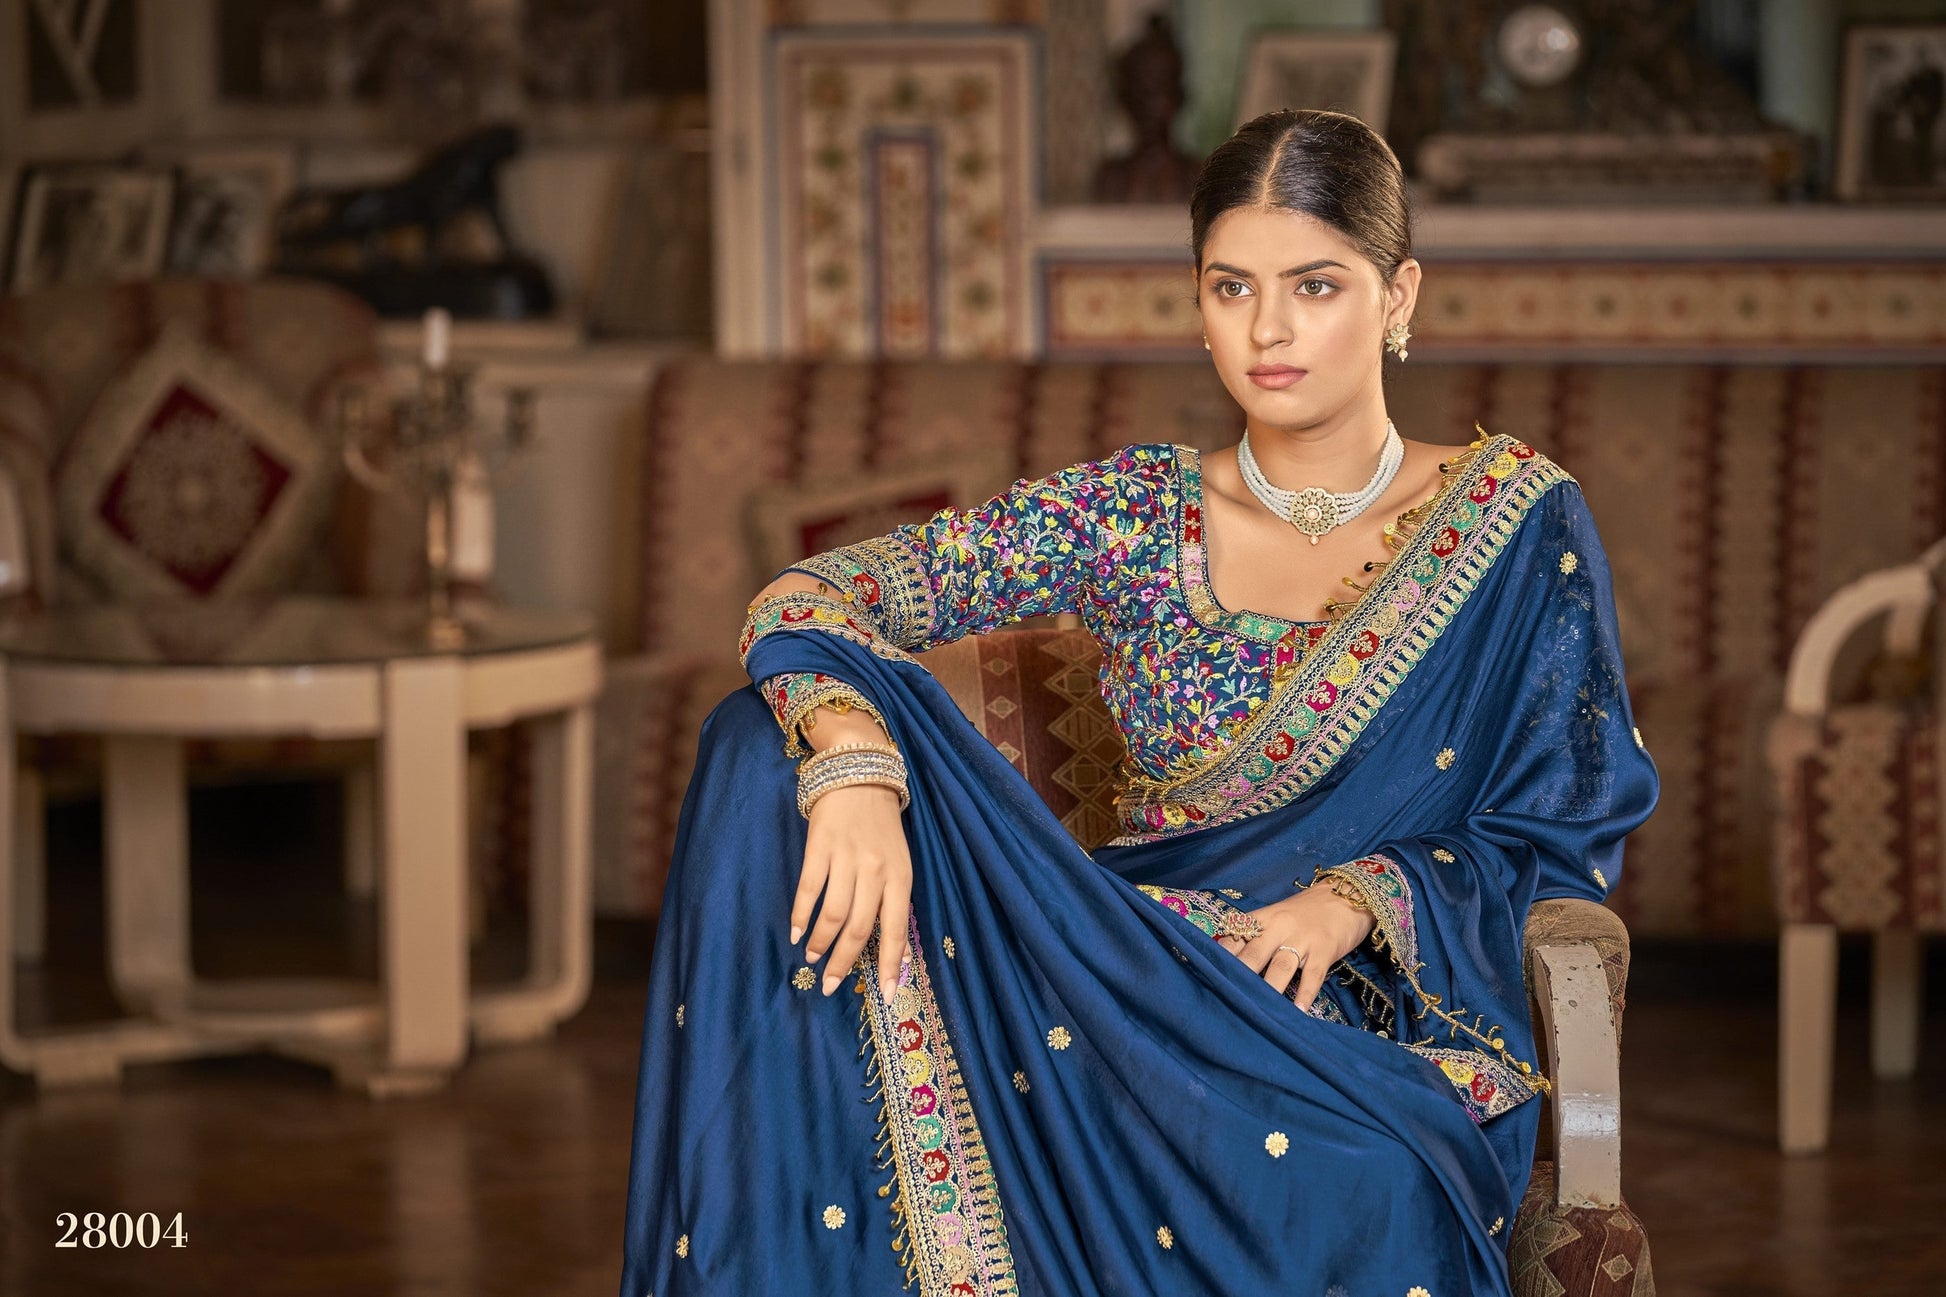 Blue Organza Saree with Blouse Festival Sari Designer Traditional Partywear Wedding Bridal - Embroidery & Zari Work